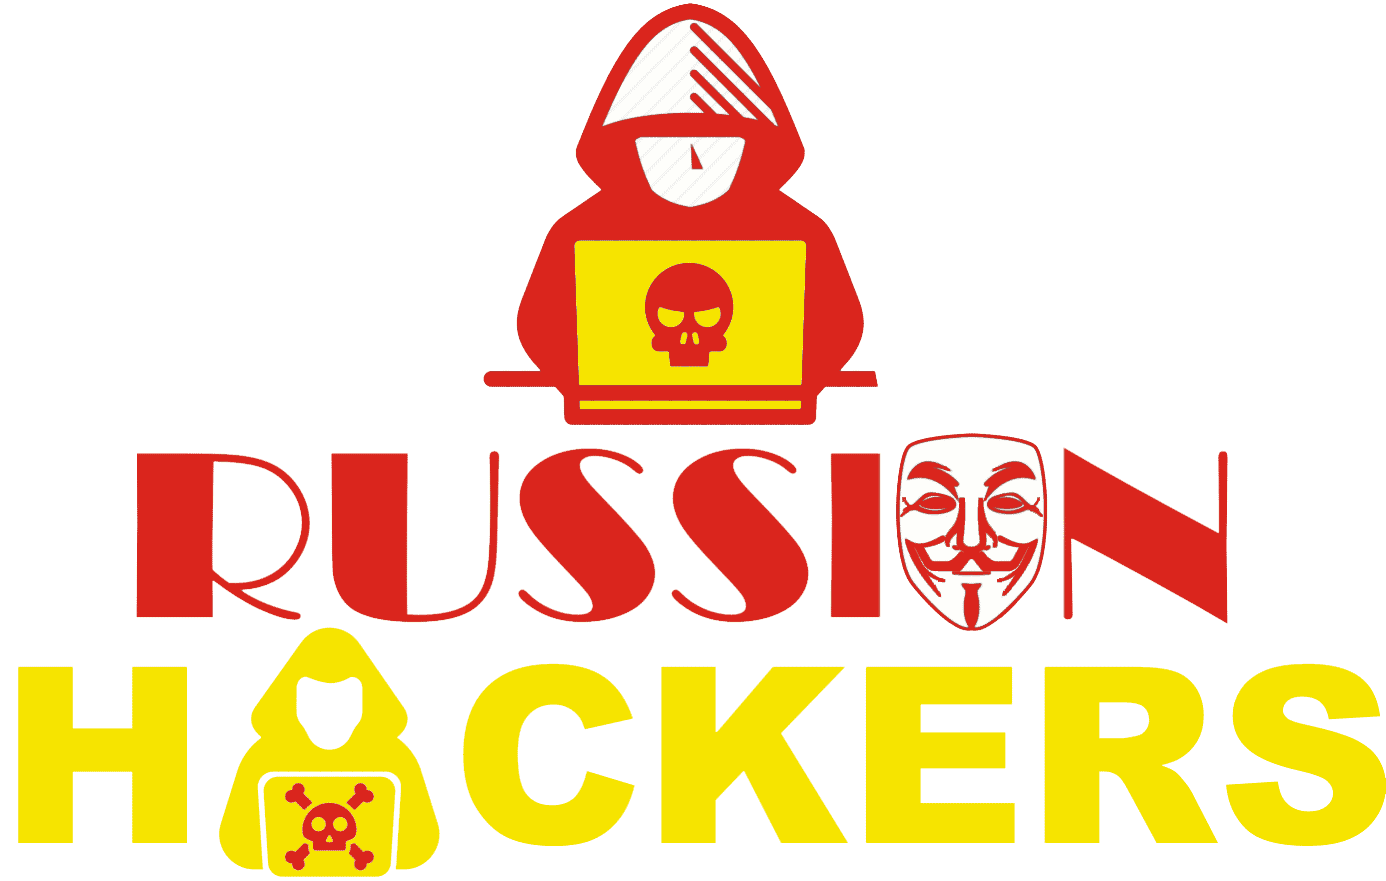 Russian Bank Hackers – Bank Account Hacking Software